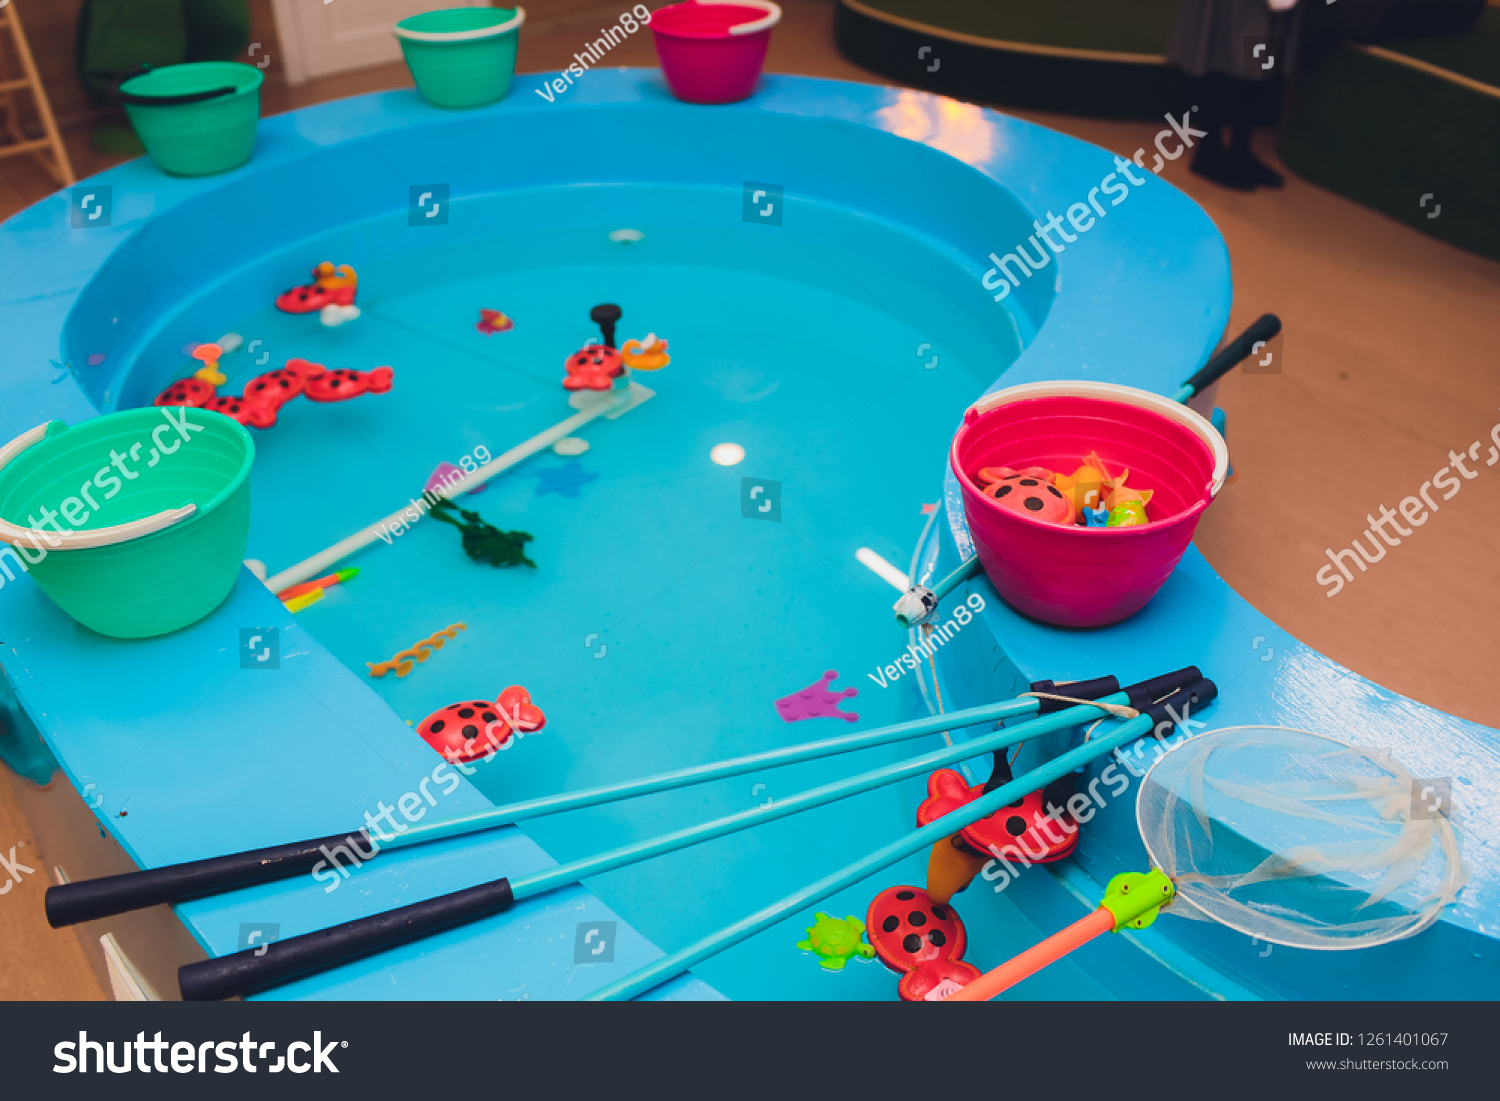 children's pool toys